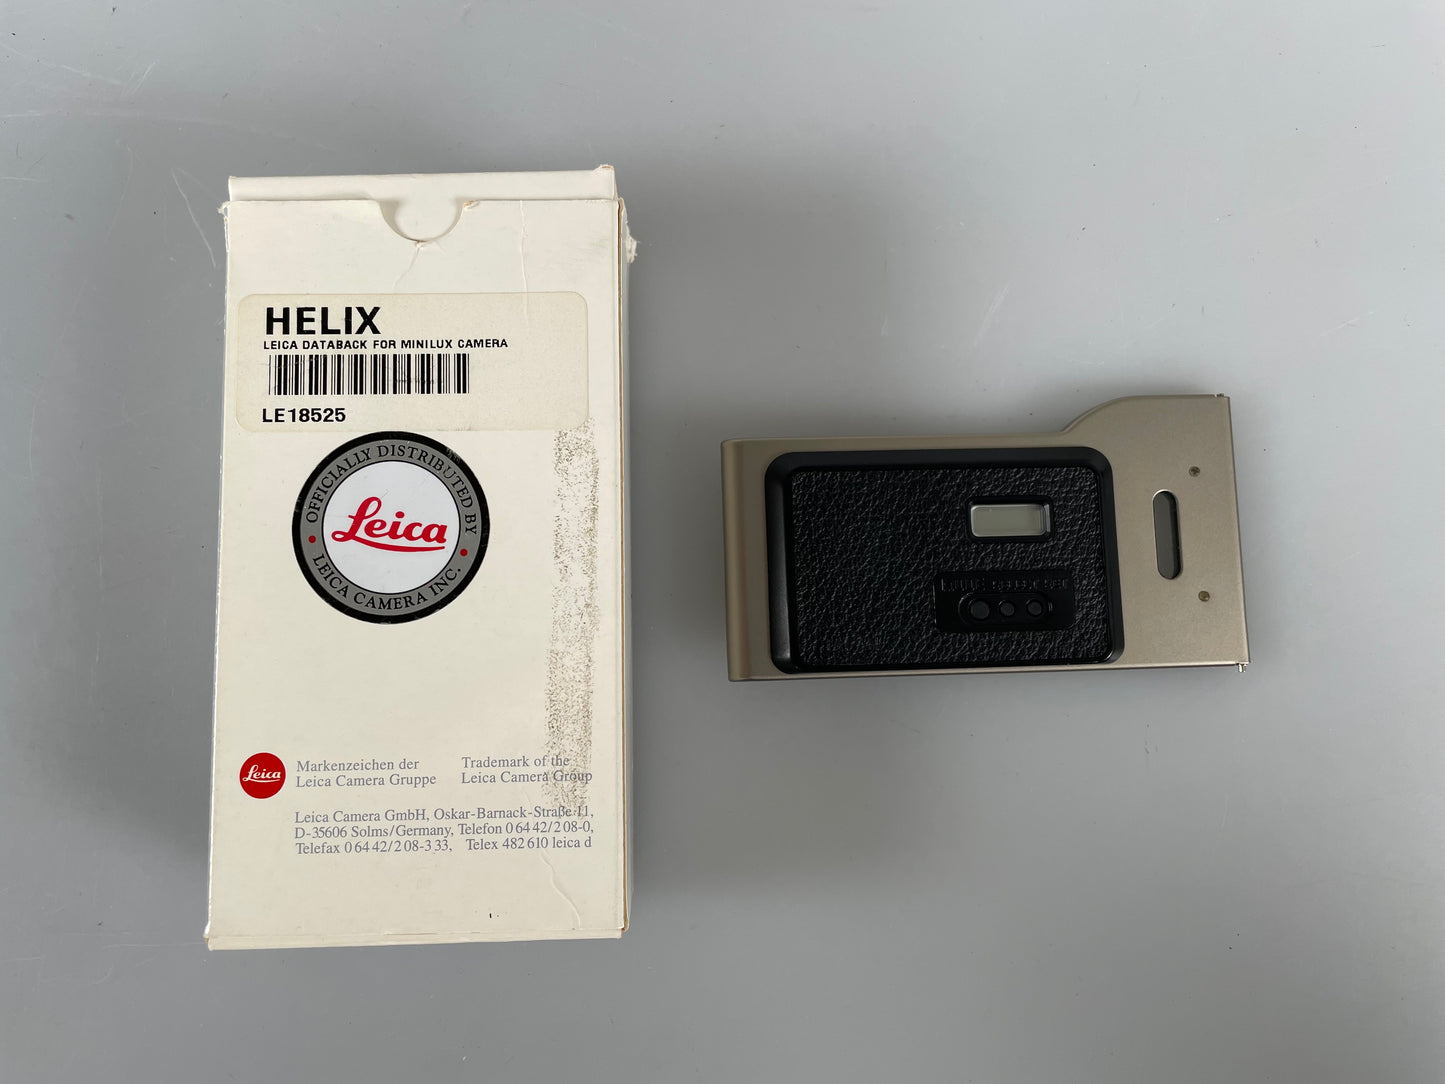 Leica Data Back 18525 for Minilux Series DB